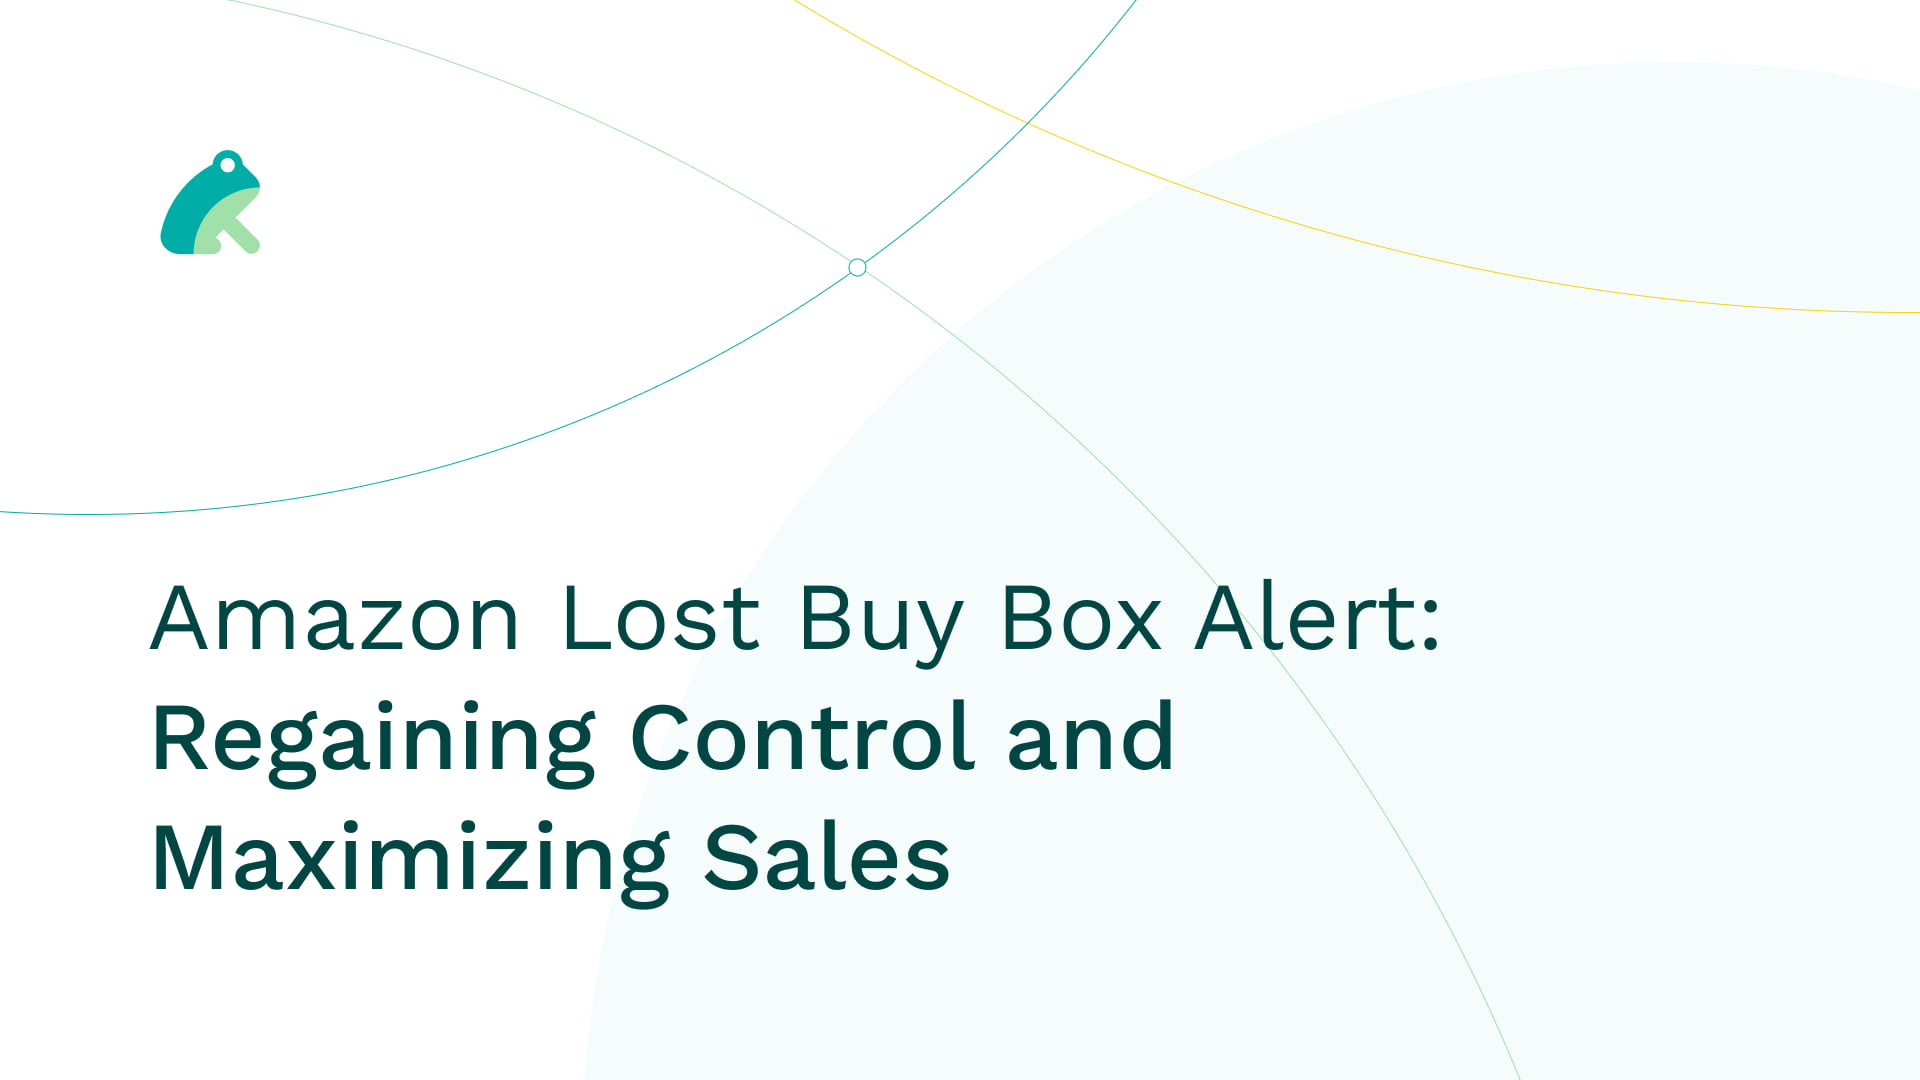 Amazon Lost Buy Box Alert: Regaining Control and Maximizing Sales